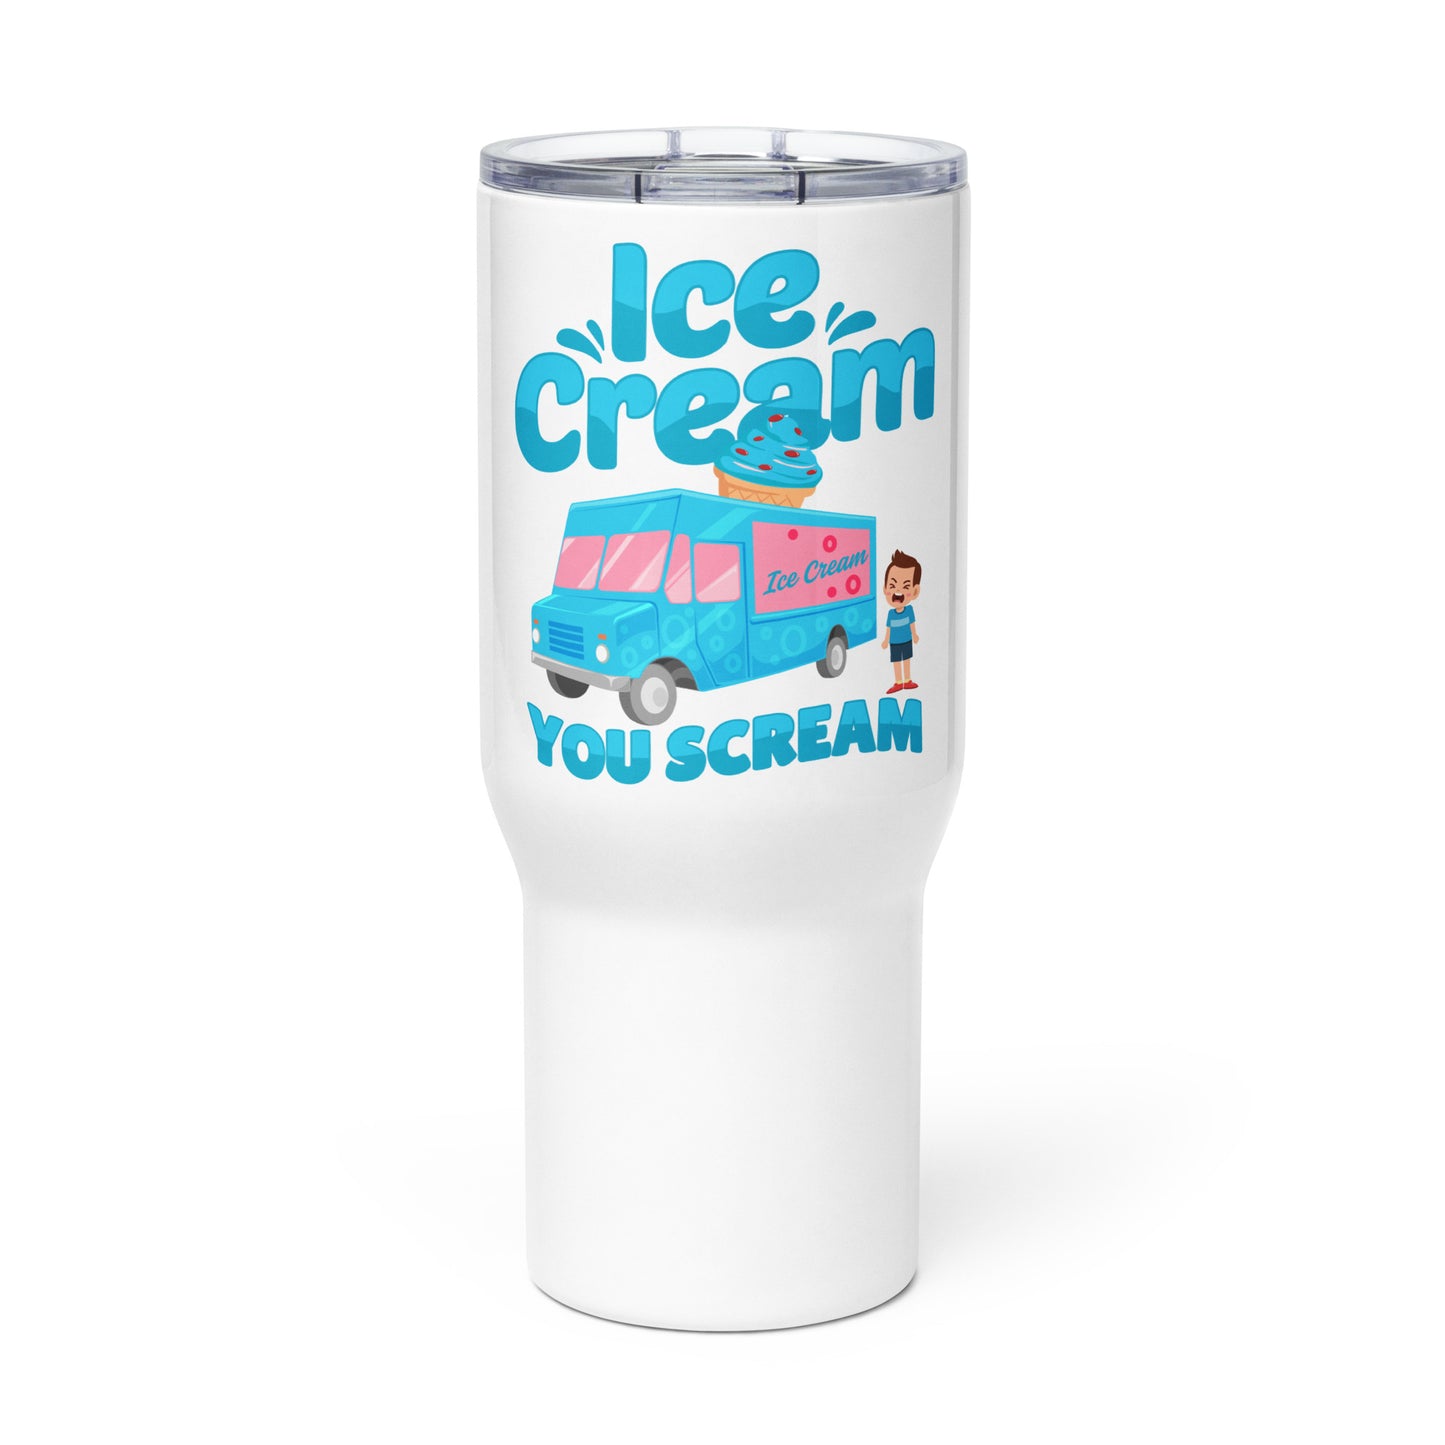 Ice Cream You Scream Travel mug with a handle